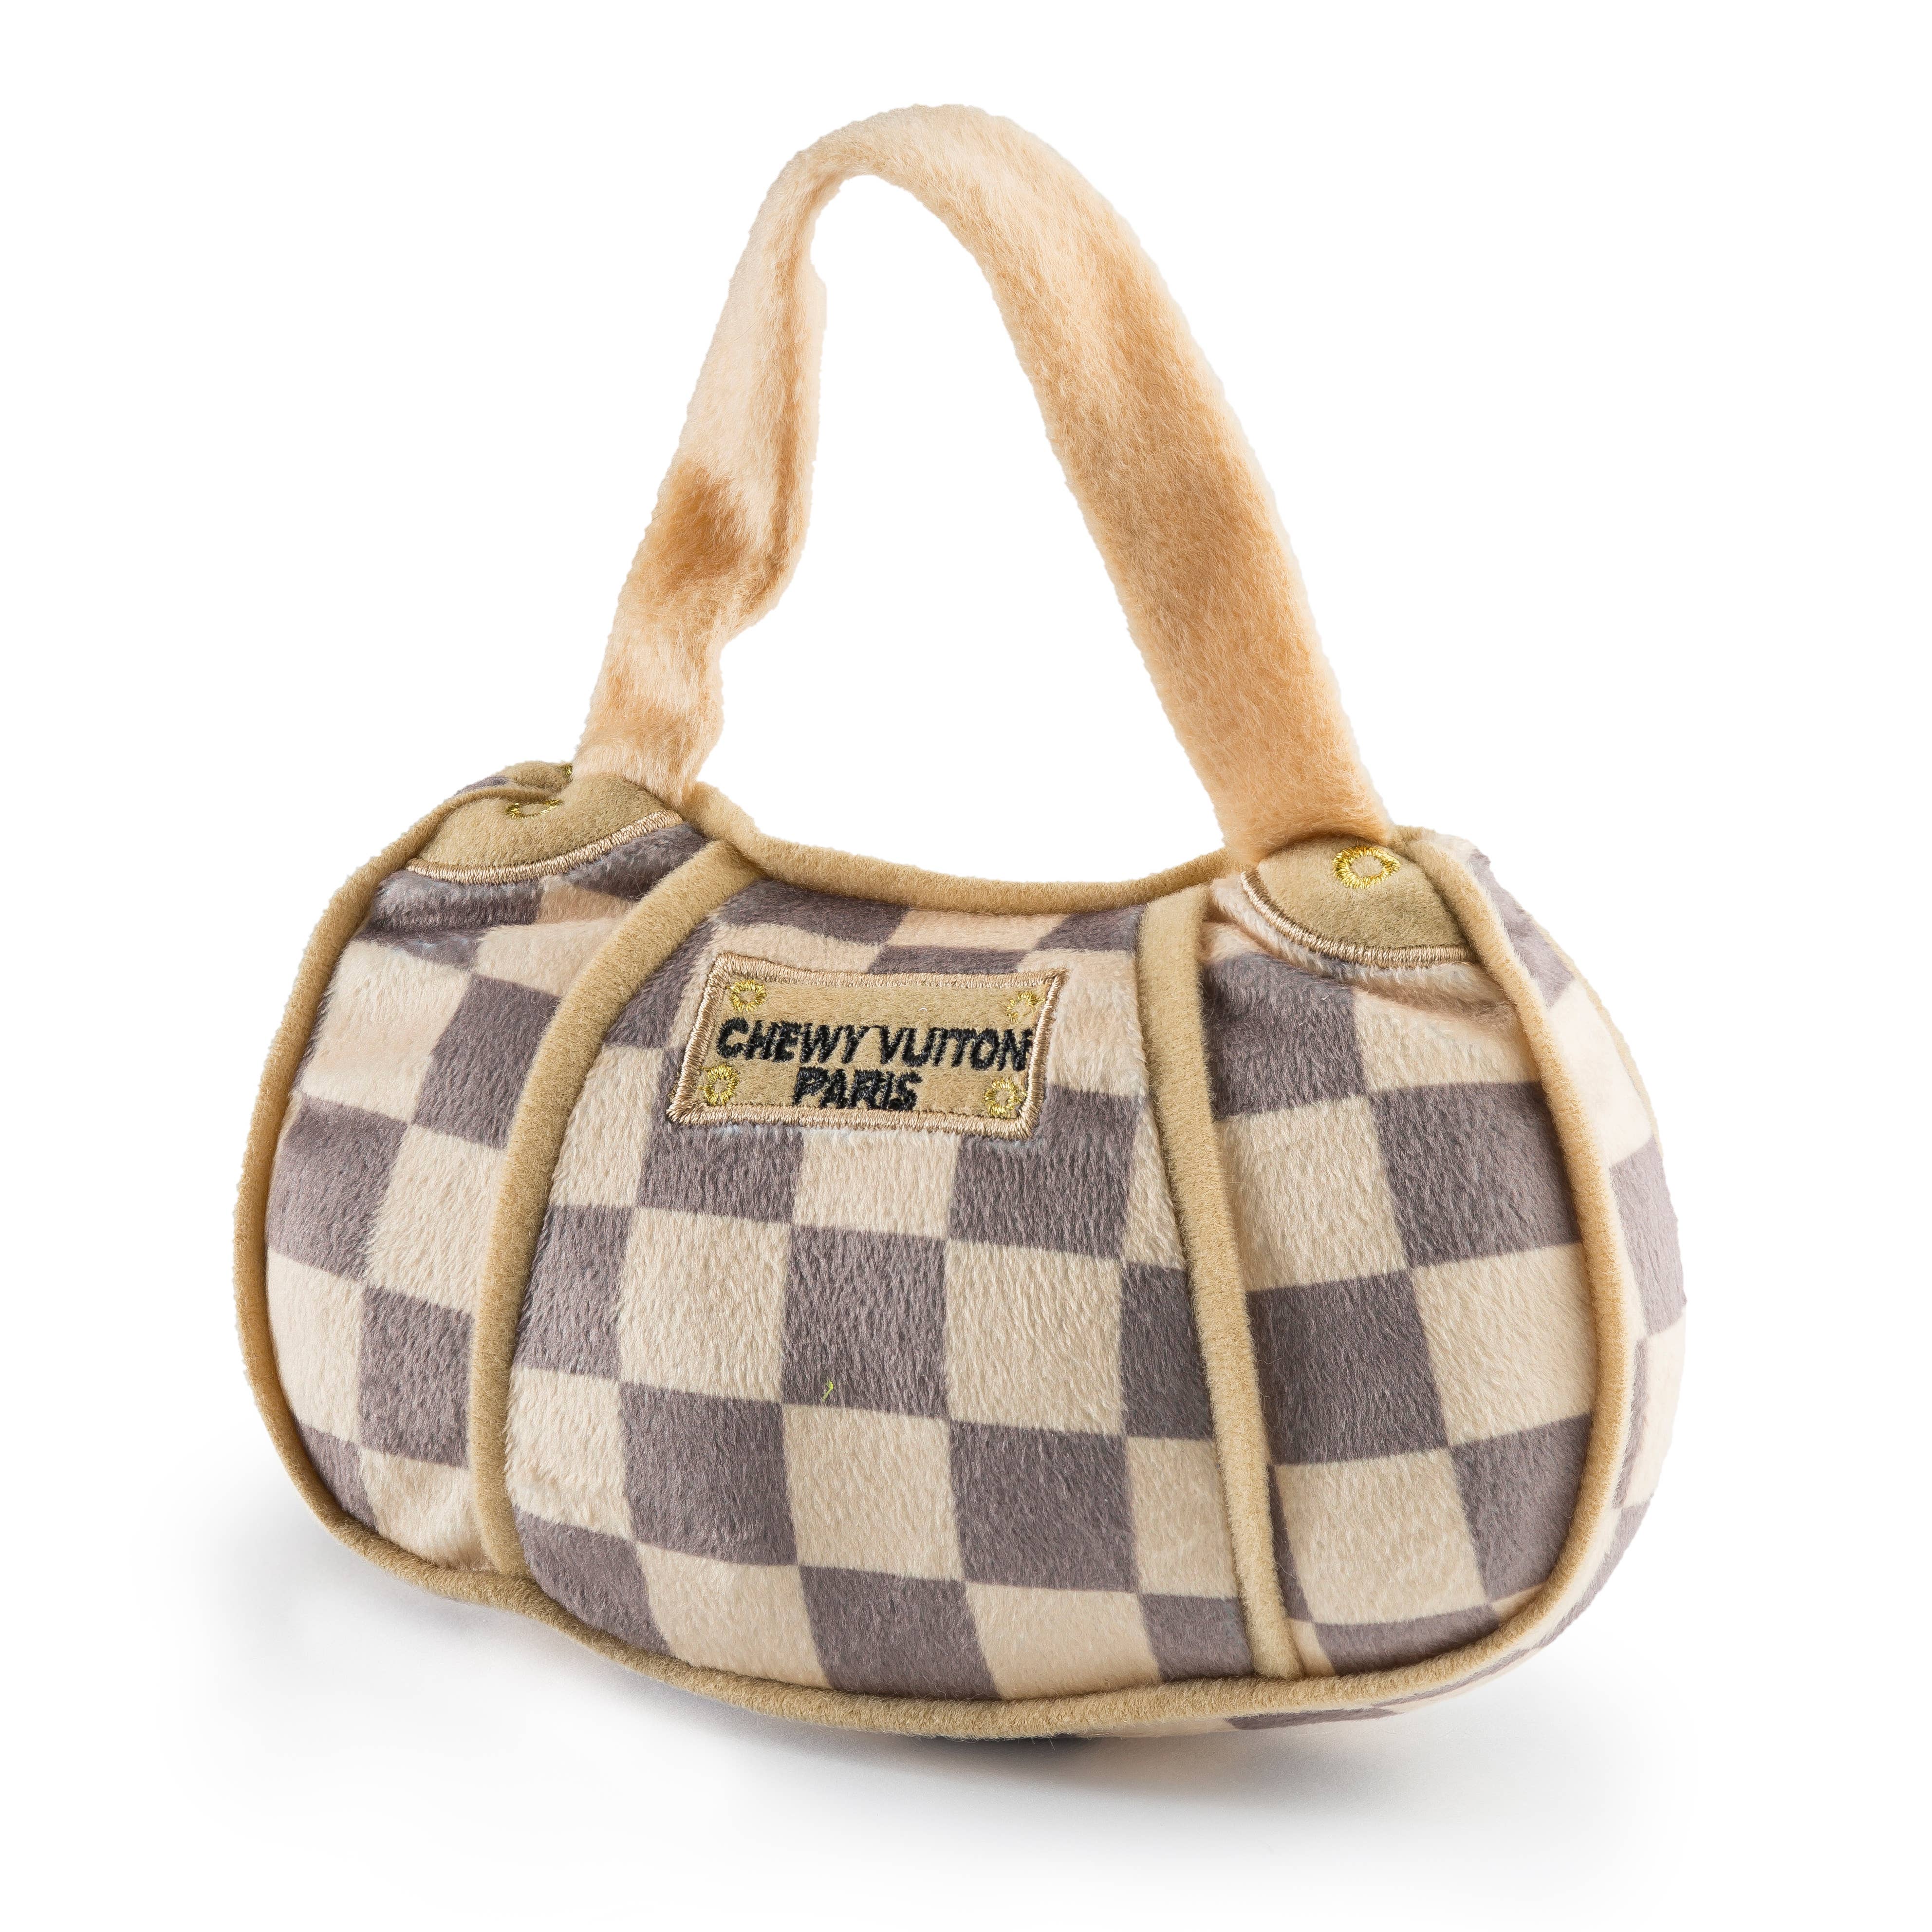 Checker Chewy Vuiton Handbag Squeaker Dog Toy – FletchandLo